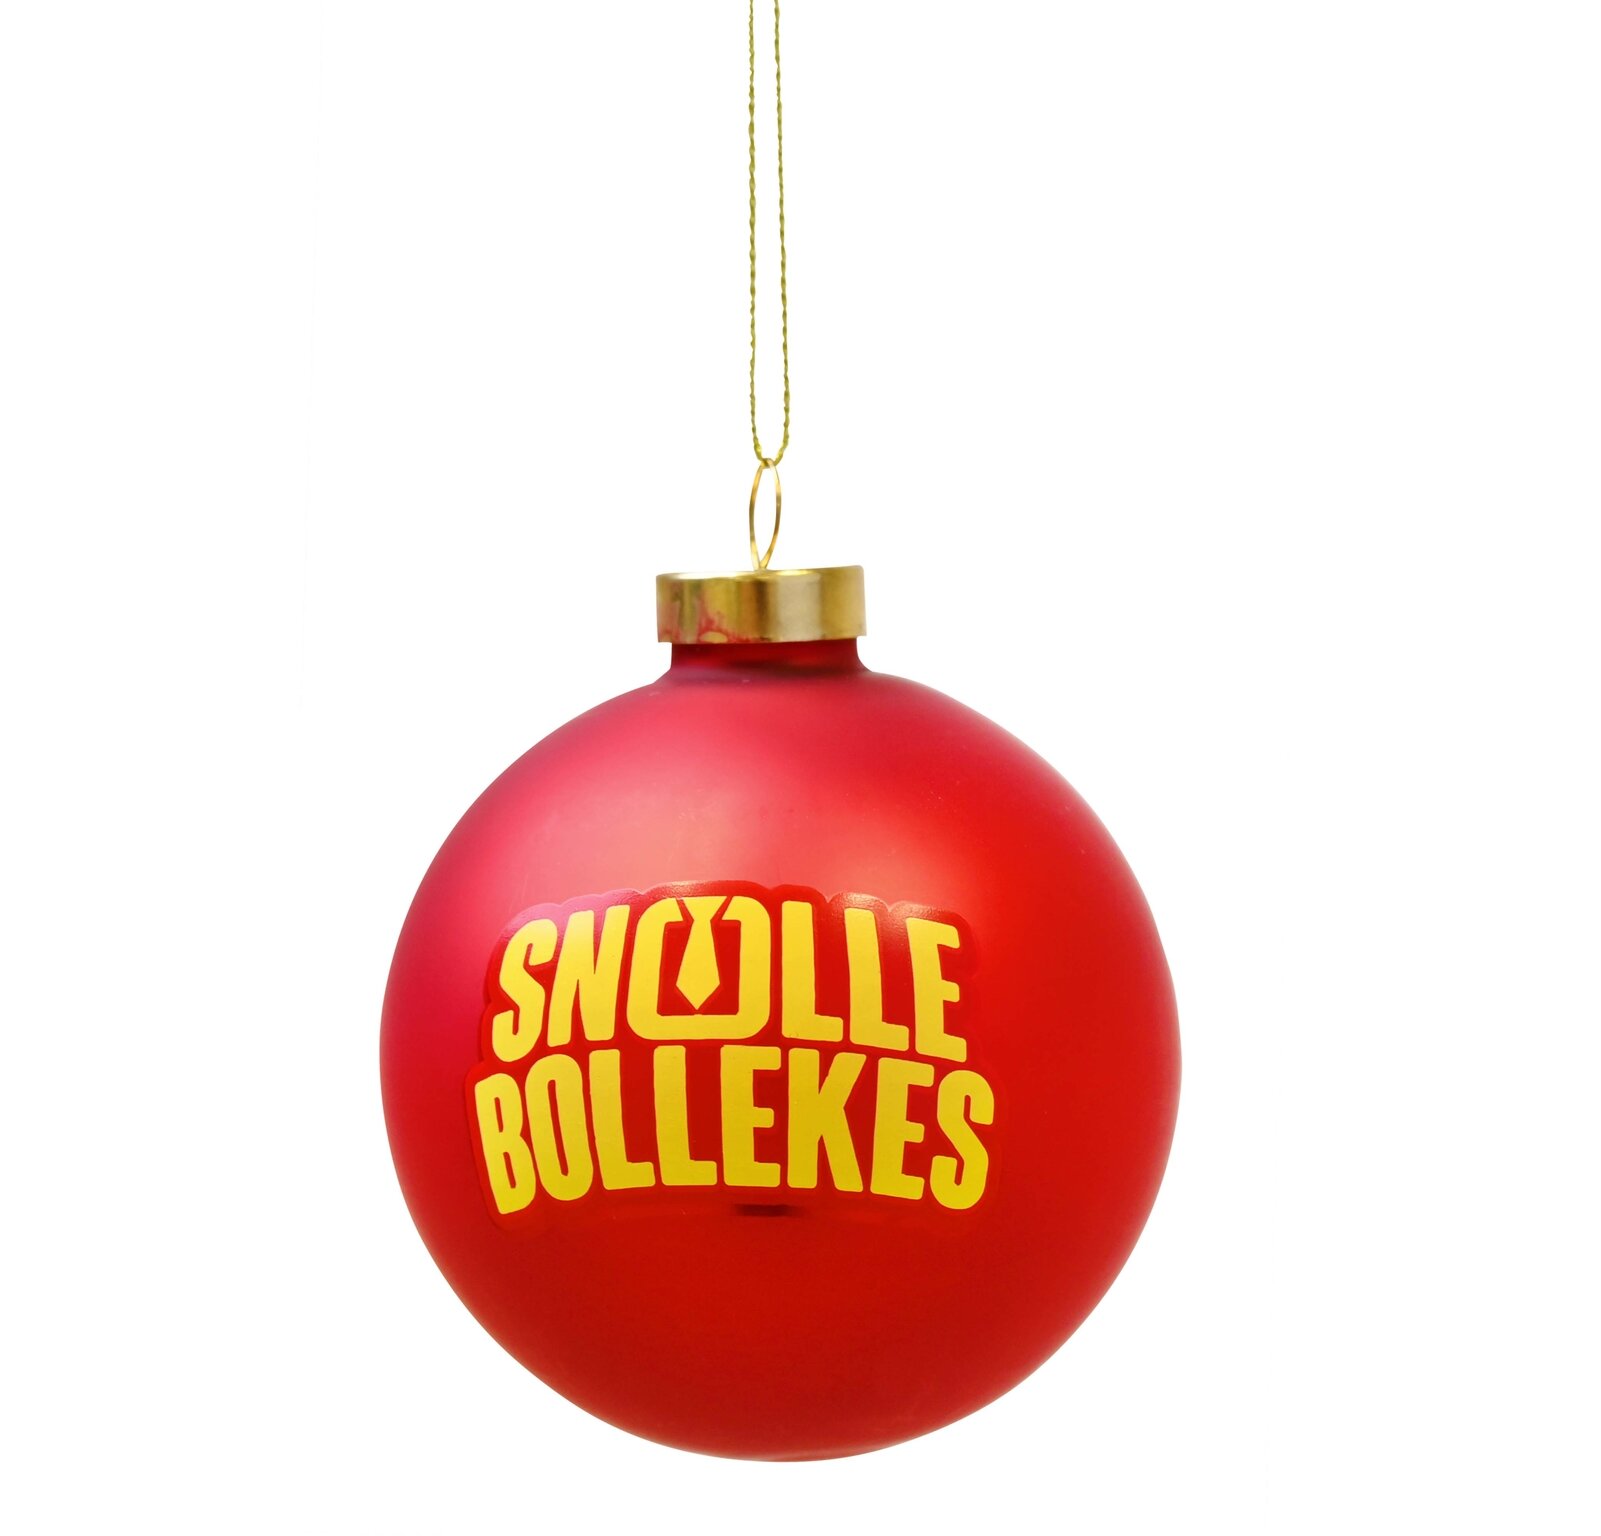 niezen Wild medley 4 Snollebollekes Kerstballen,set A - KerstwinQel.nl